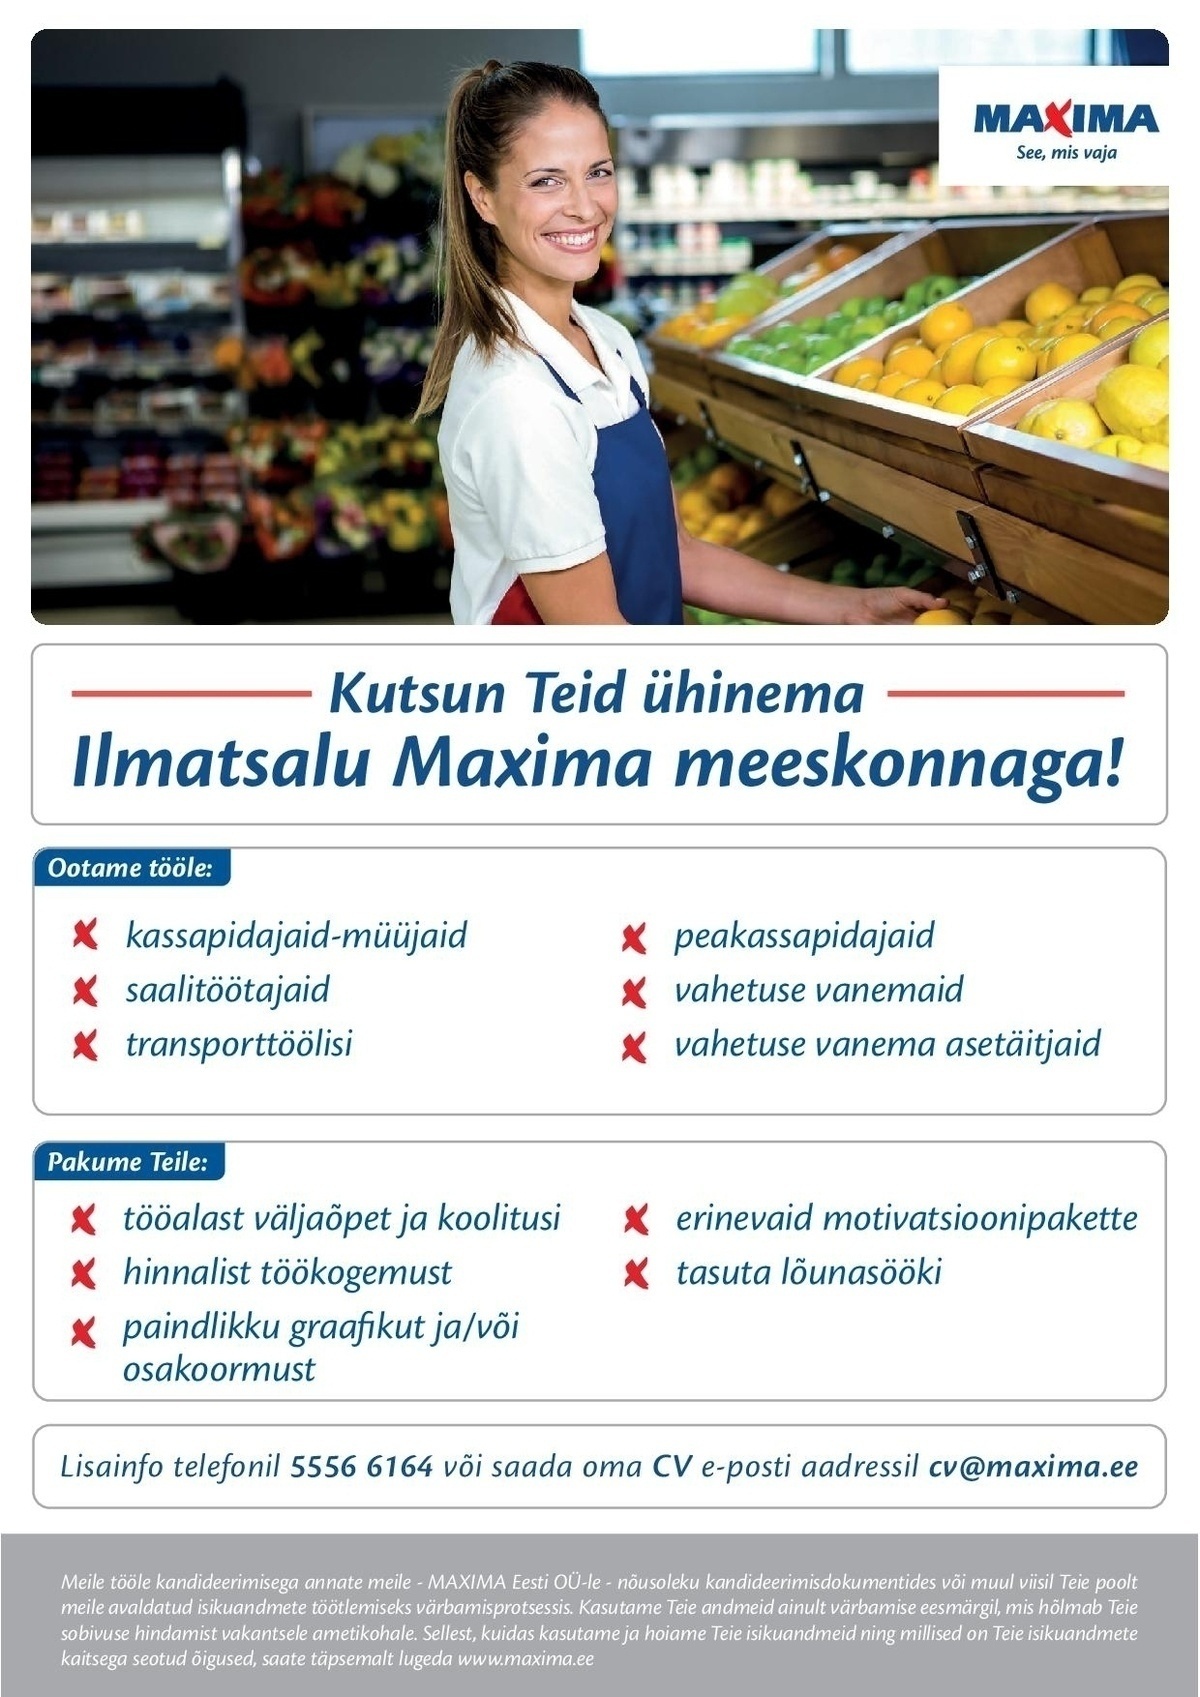 Maxima Eesti OÜ Klienditeenindaja uuendatud Ilmatsalu Maximas